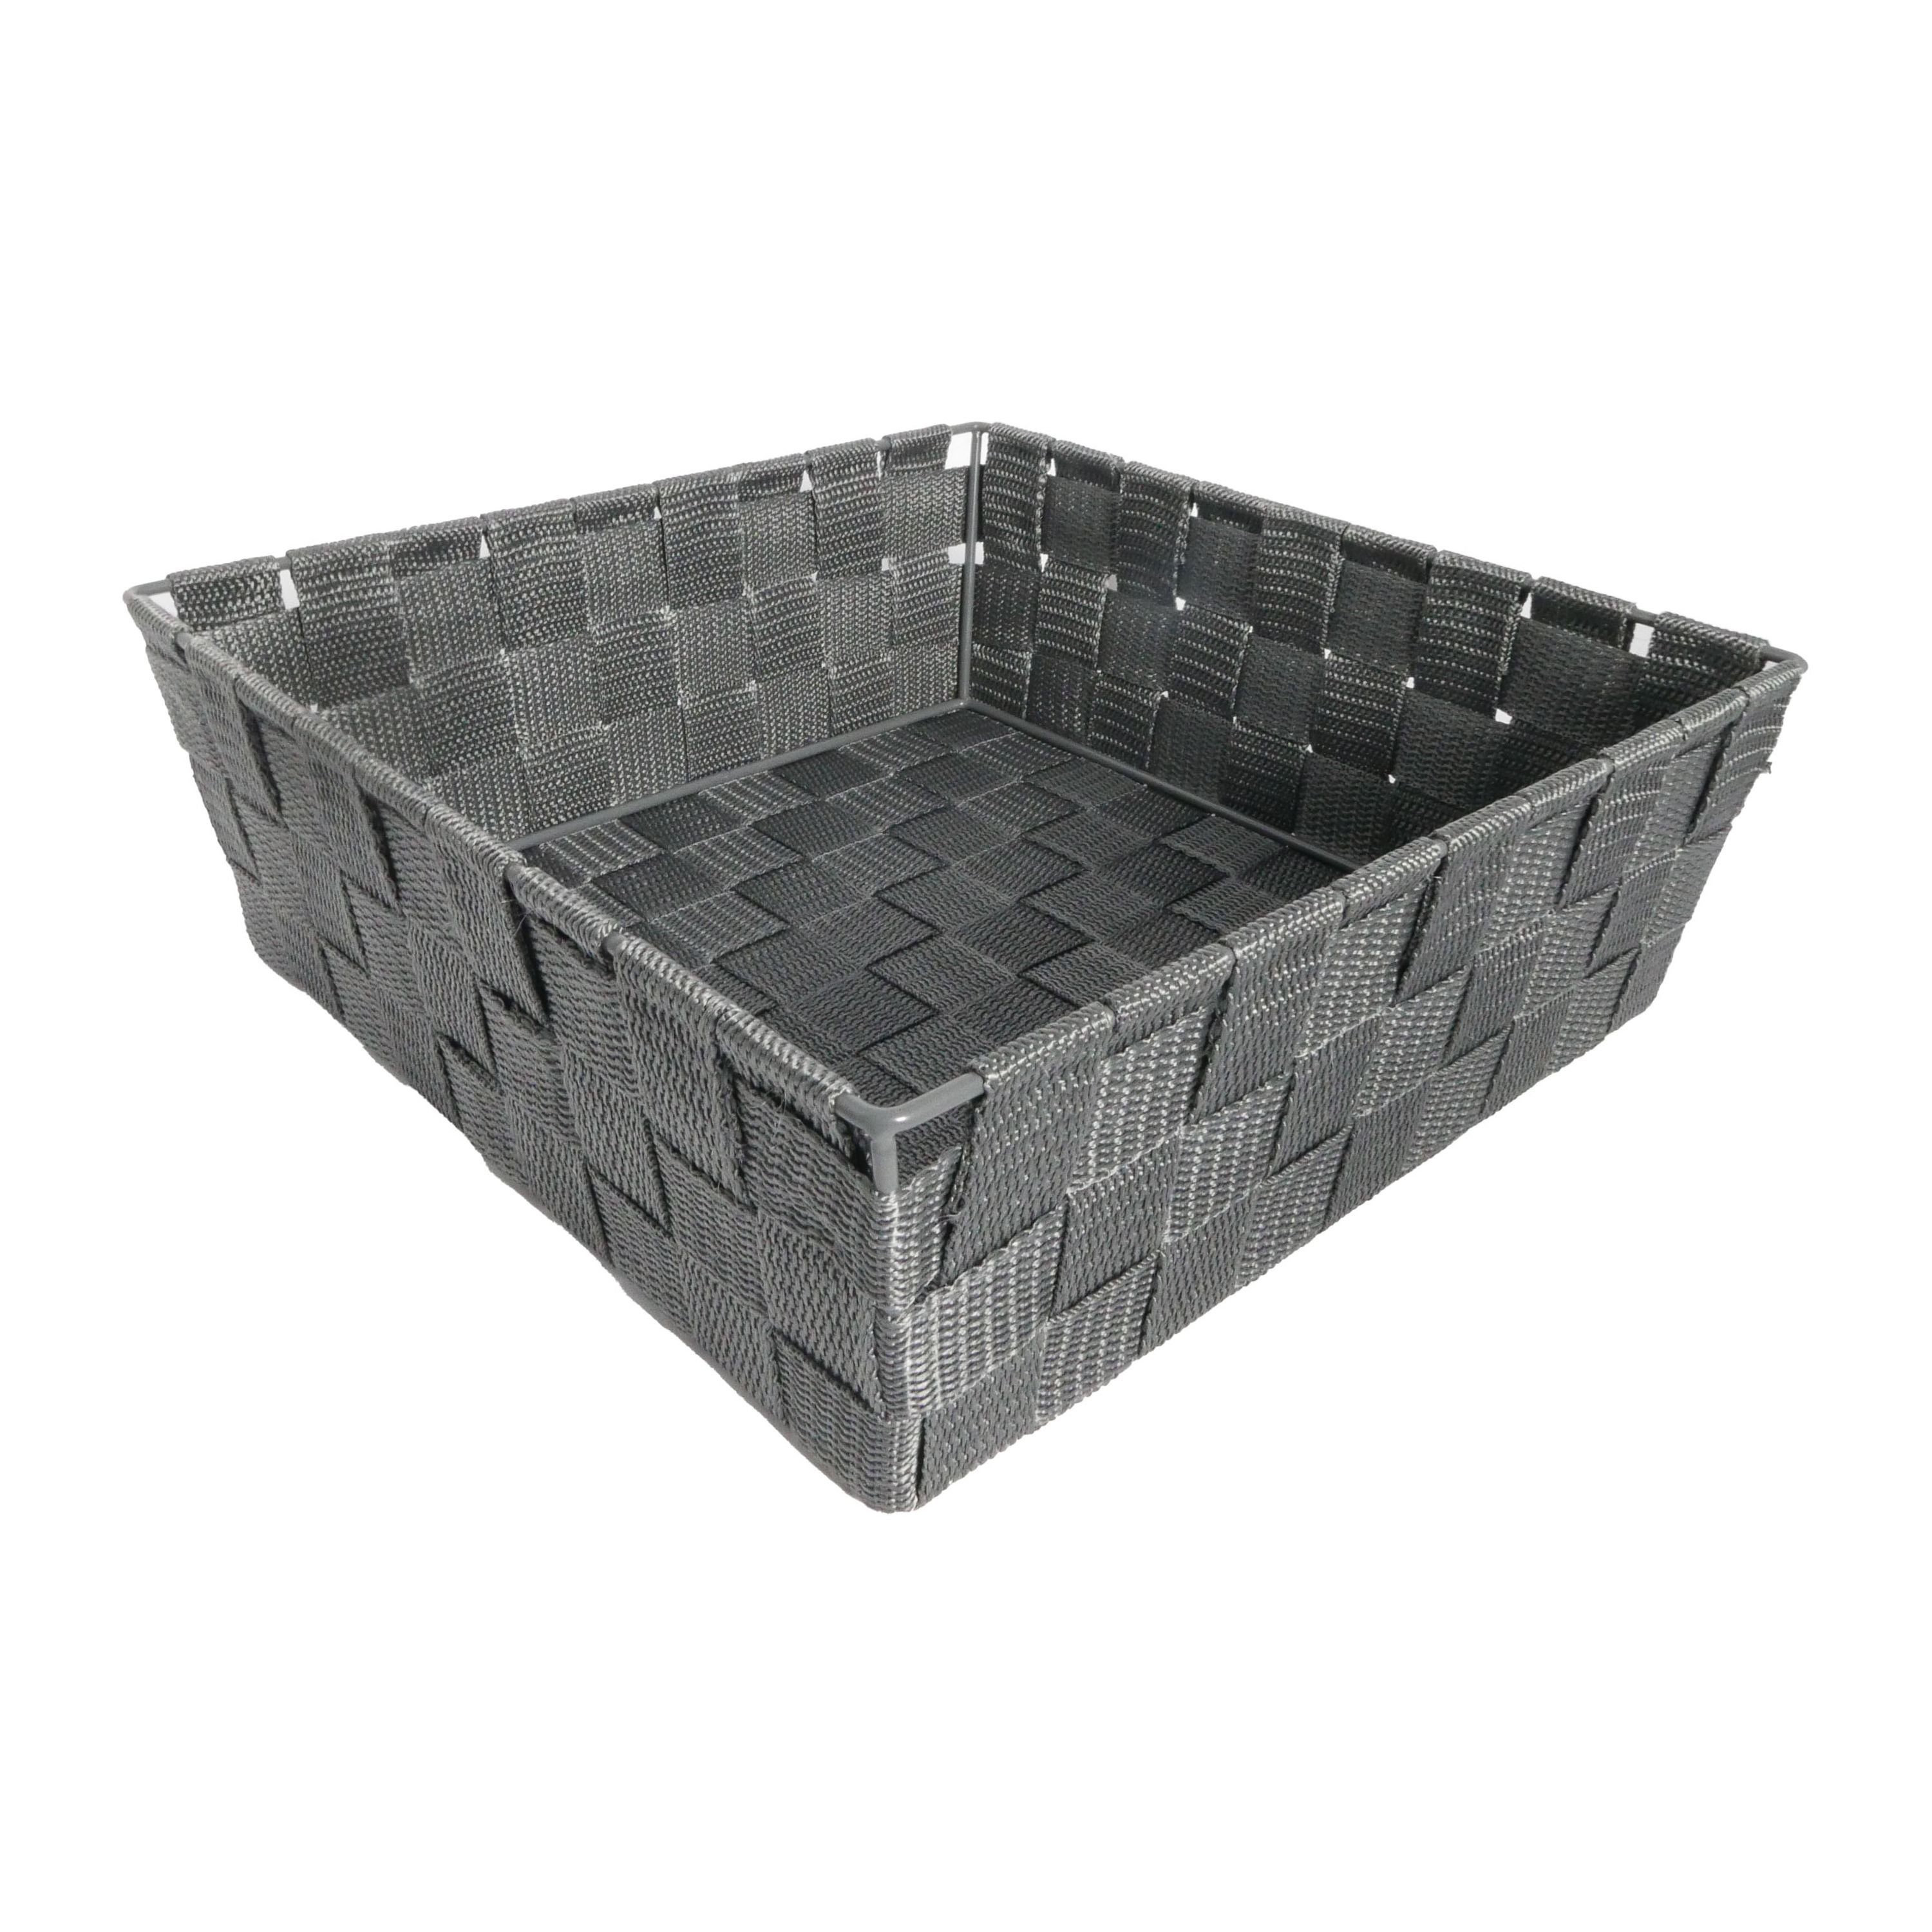 B&S Regalkorb Regalkorb Geflecht grau Ordnungsbox quadatisch 27 x 27 cm